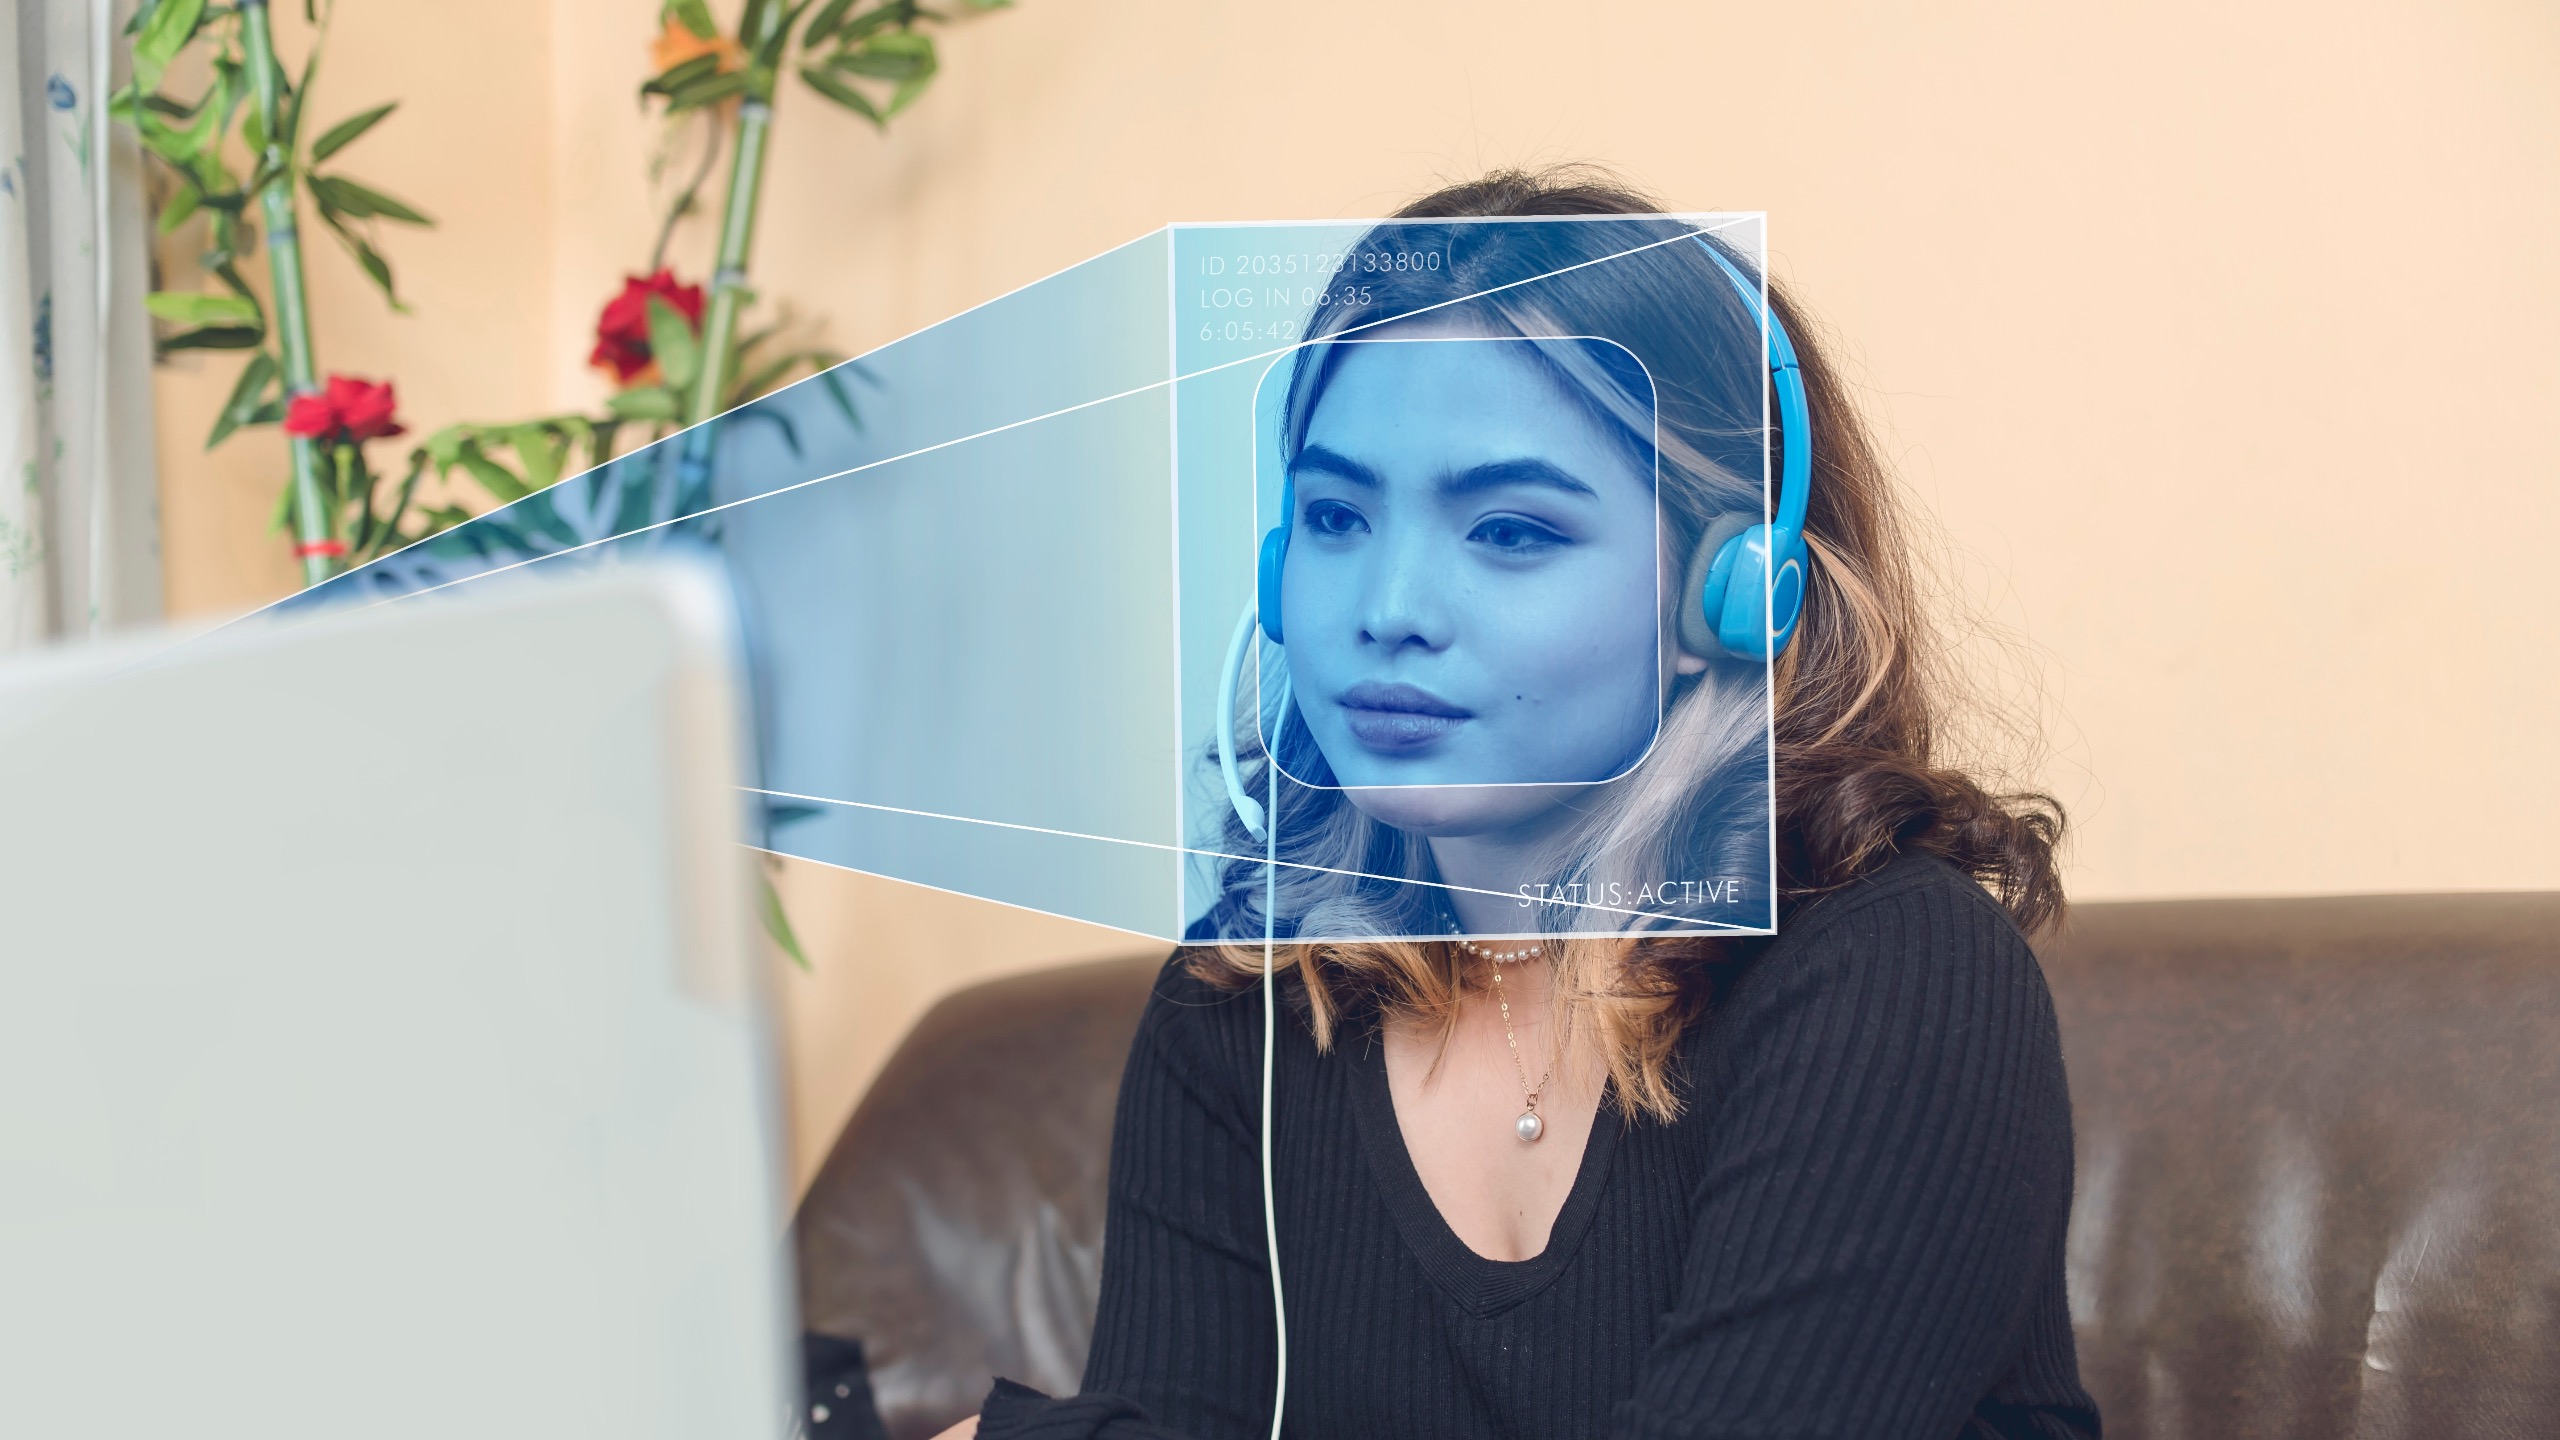 Aplikacija AI Selfie razkrita kot moški šovinist